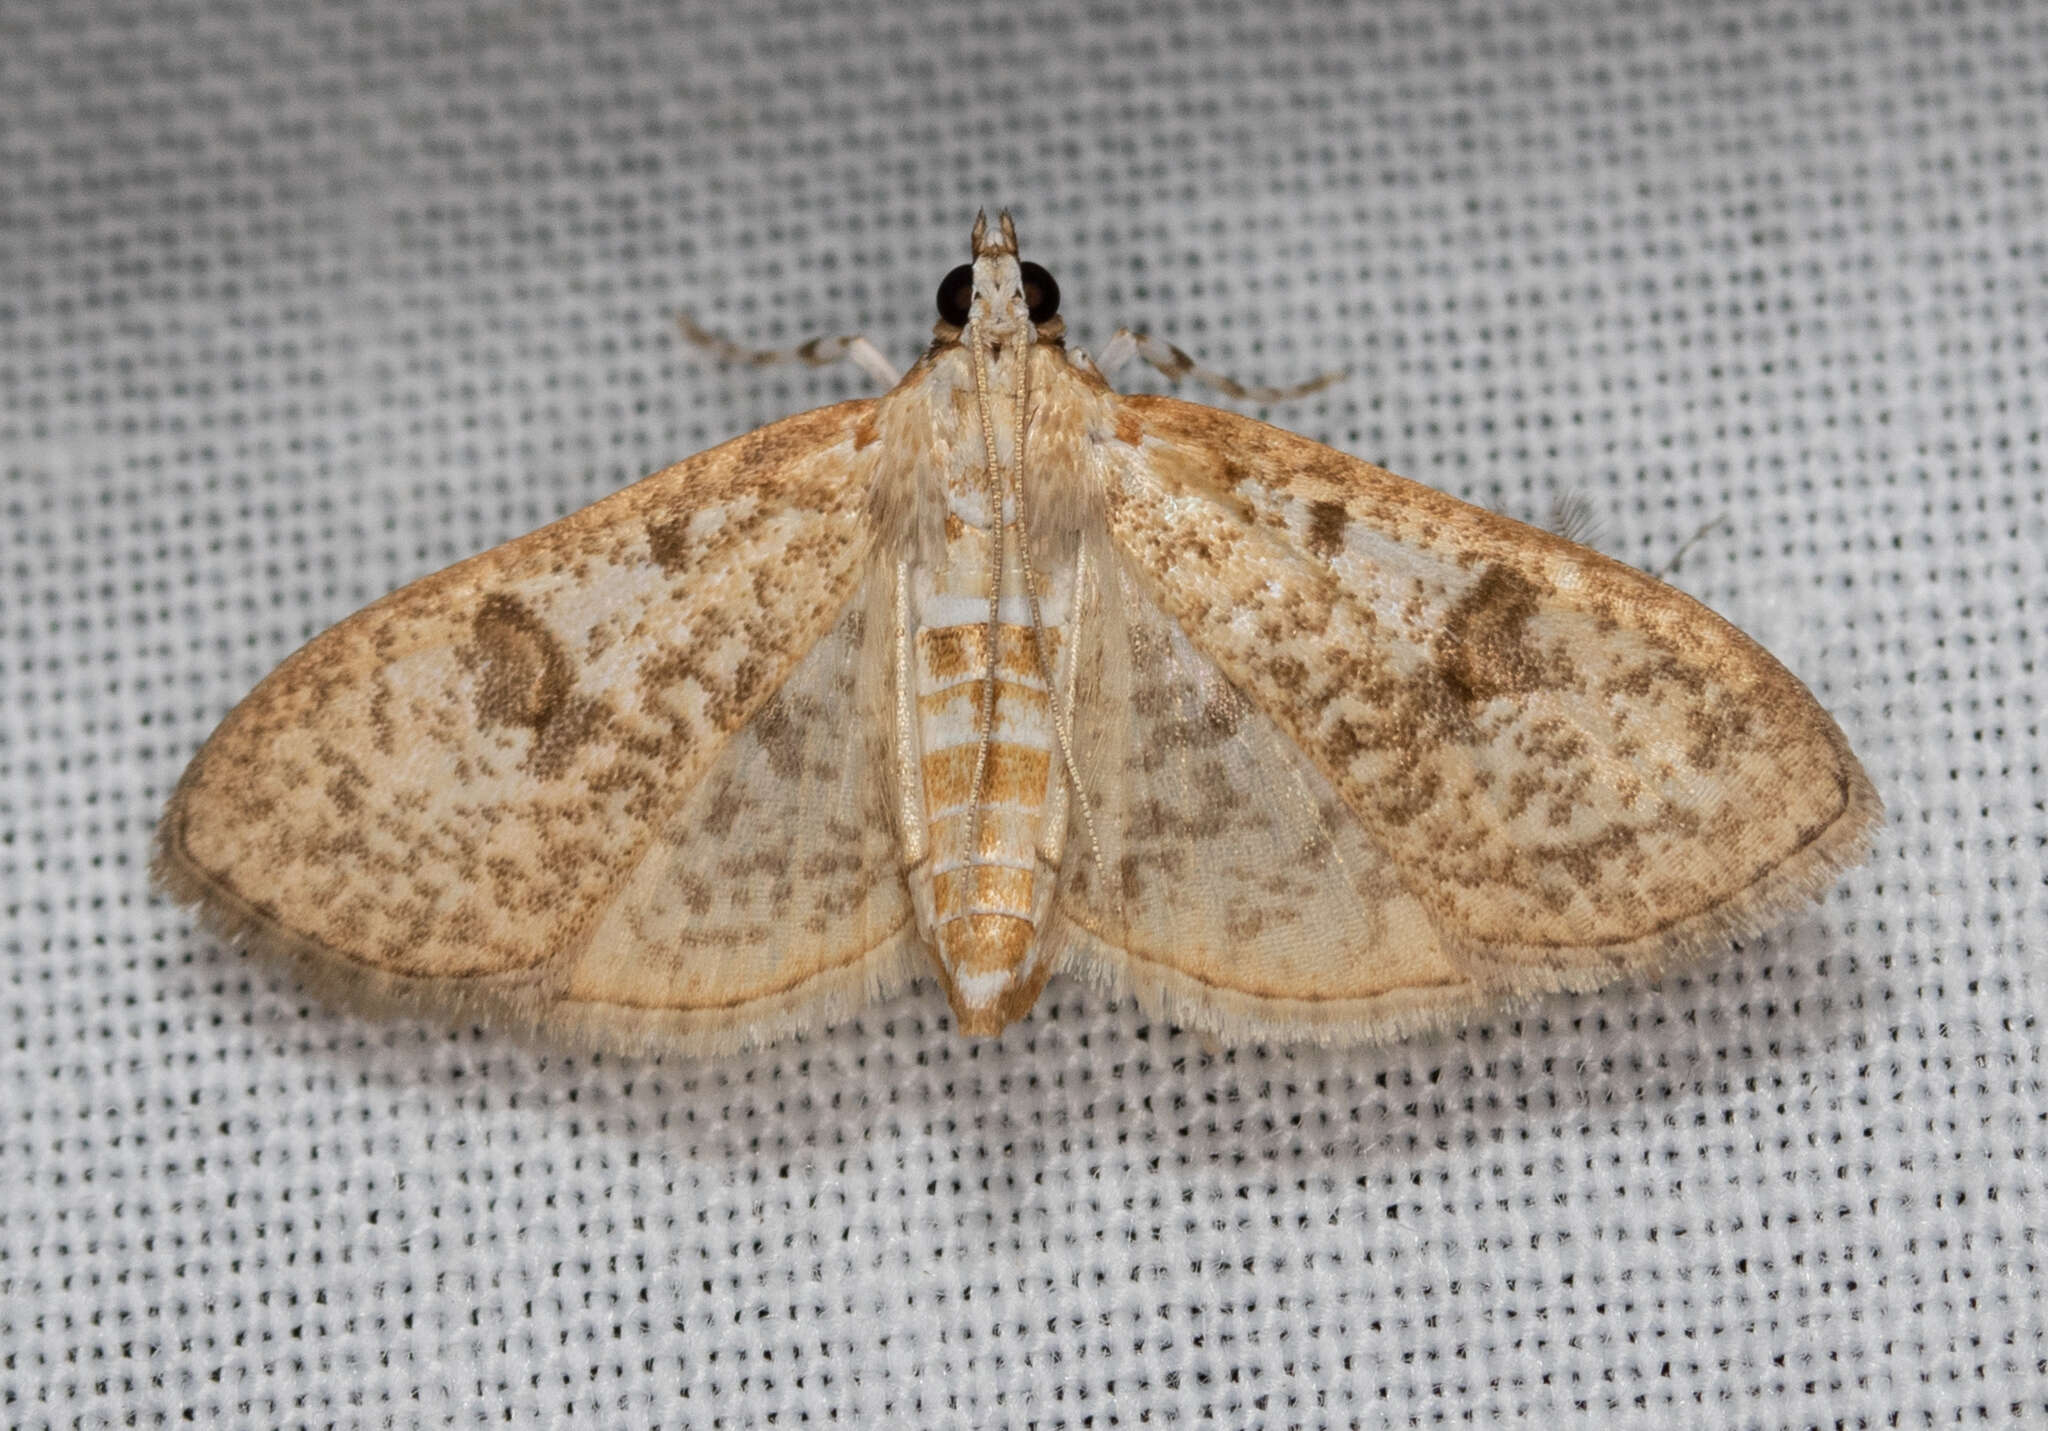 Image of Freeman's Palpita Moth